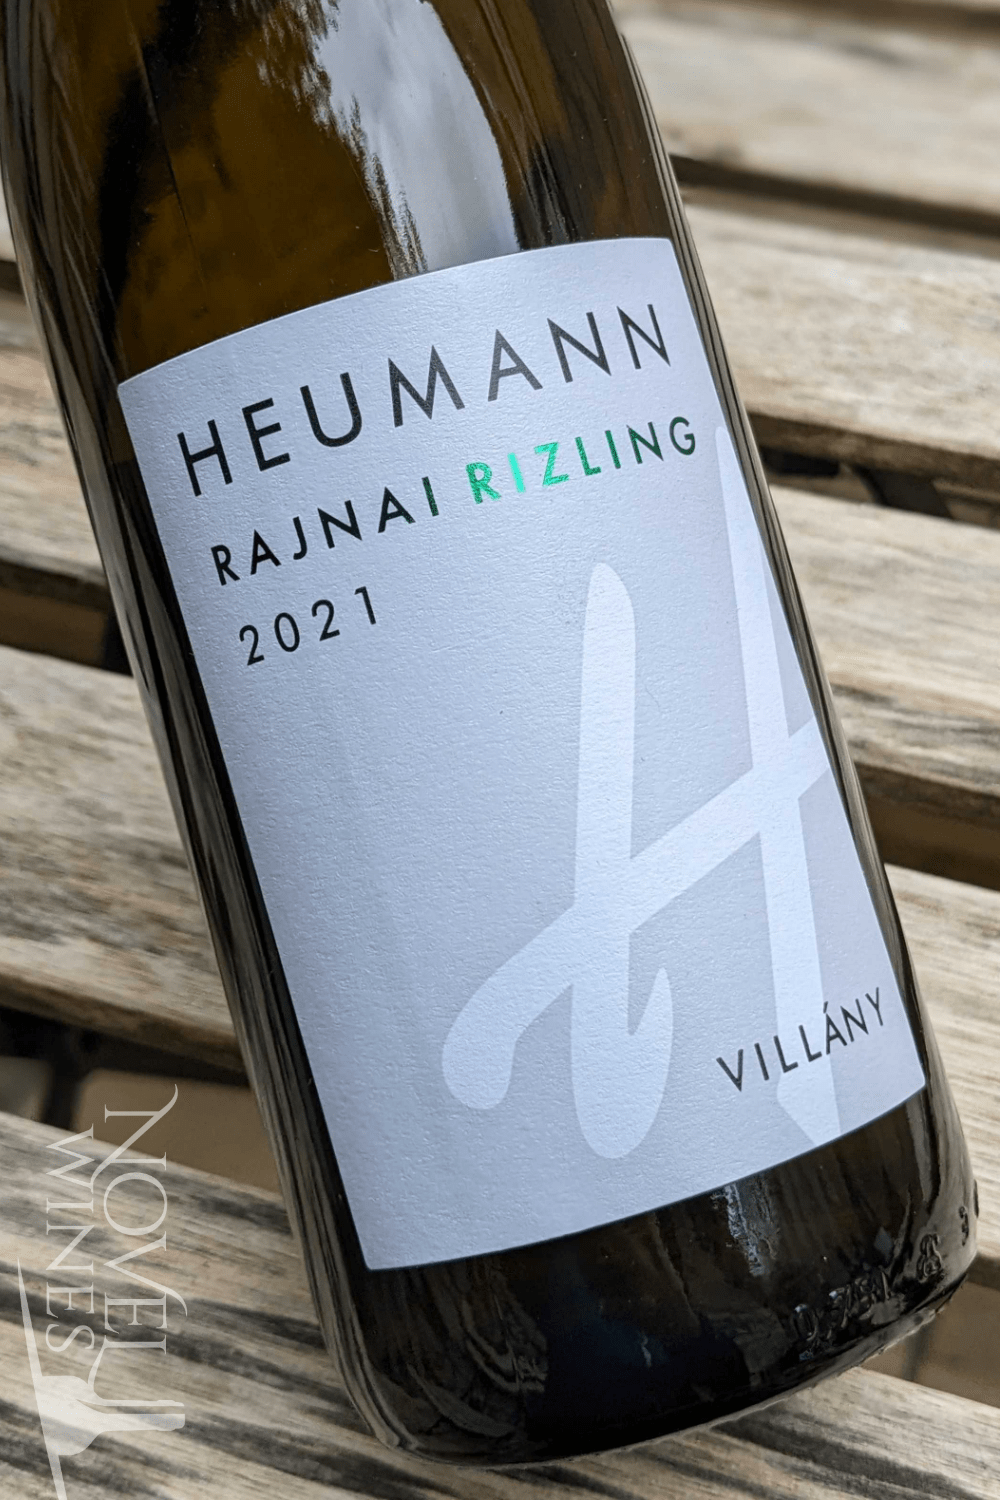 Heumann White Wine Heumann Riesling (Rajnai Rizling) 2021, Hungary